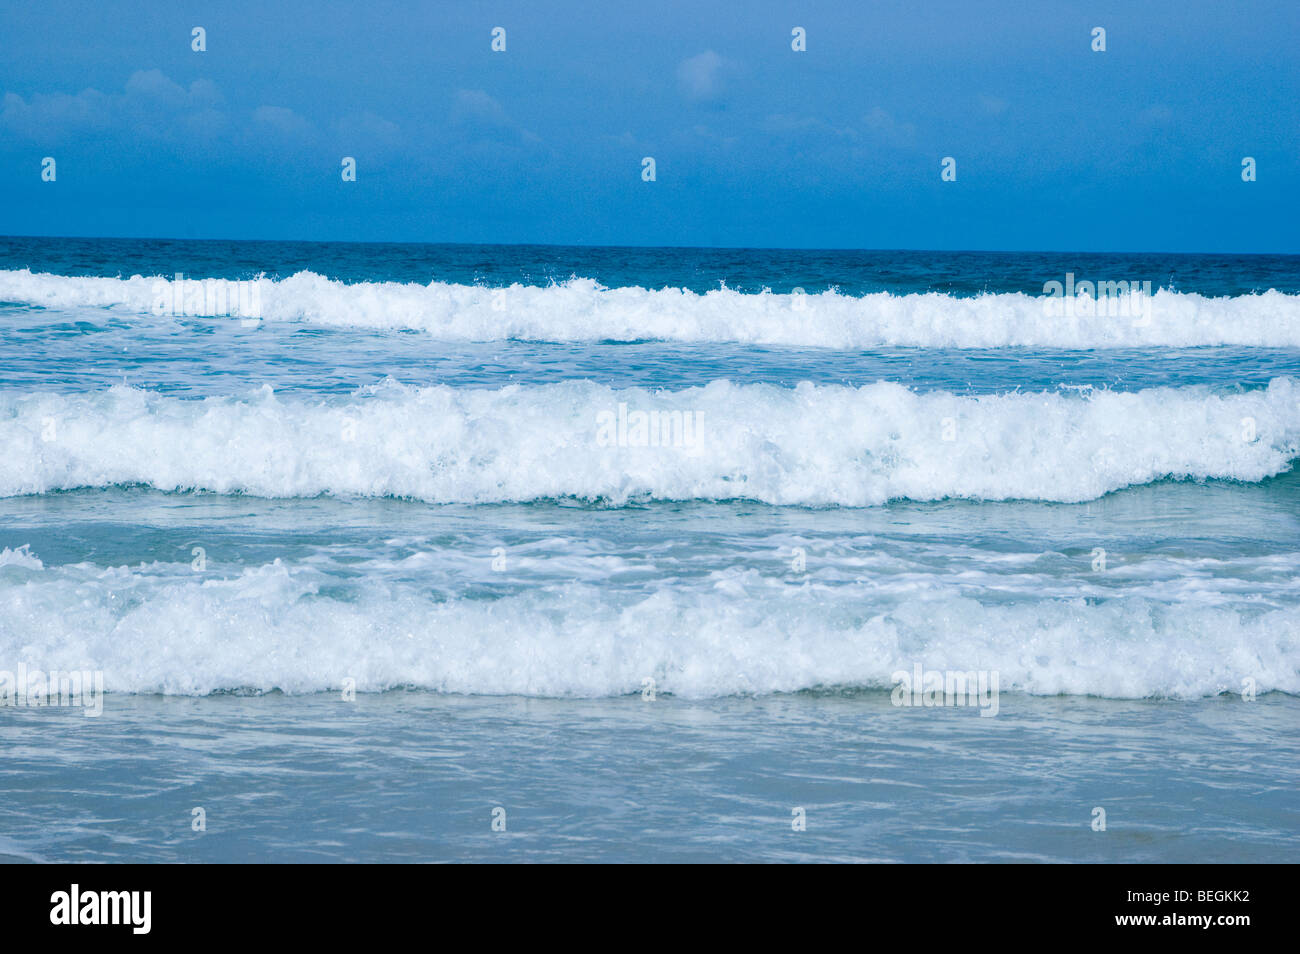 NaiHarn Beach, Insel Phuket, Thailand - September 2009. Blaue Wellen des Andaman Meeres. Stockfoto